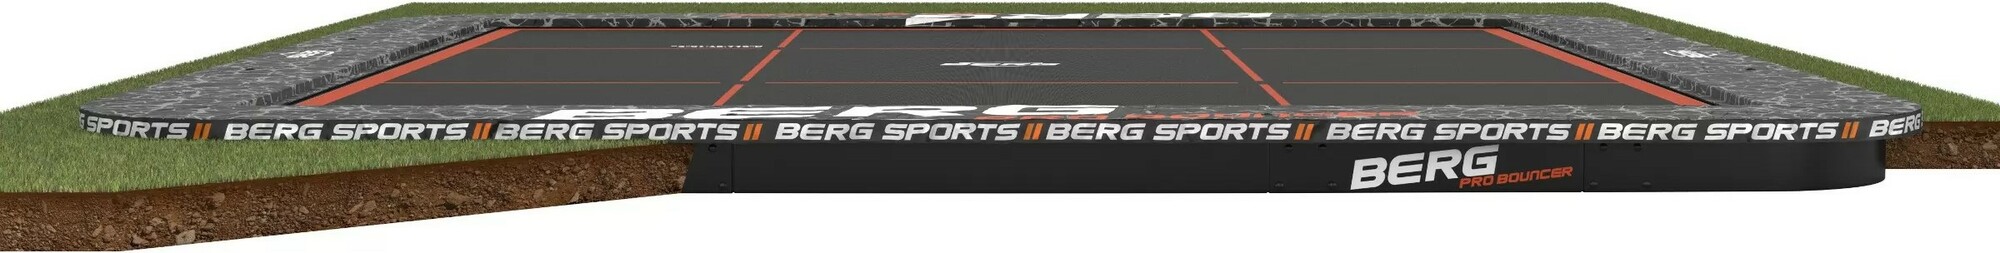 BERG Sport Ultim Pro Bouncer FlatGround 5x5